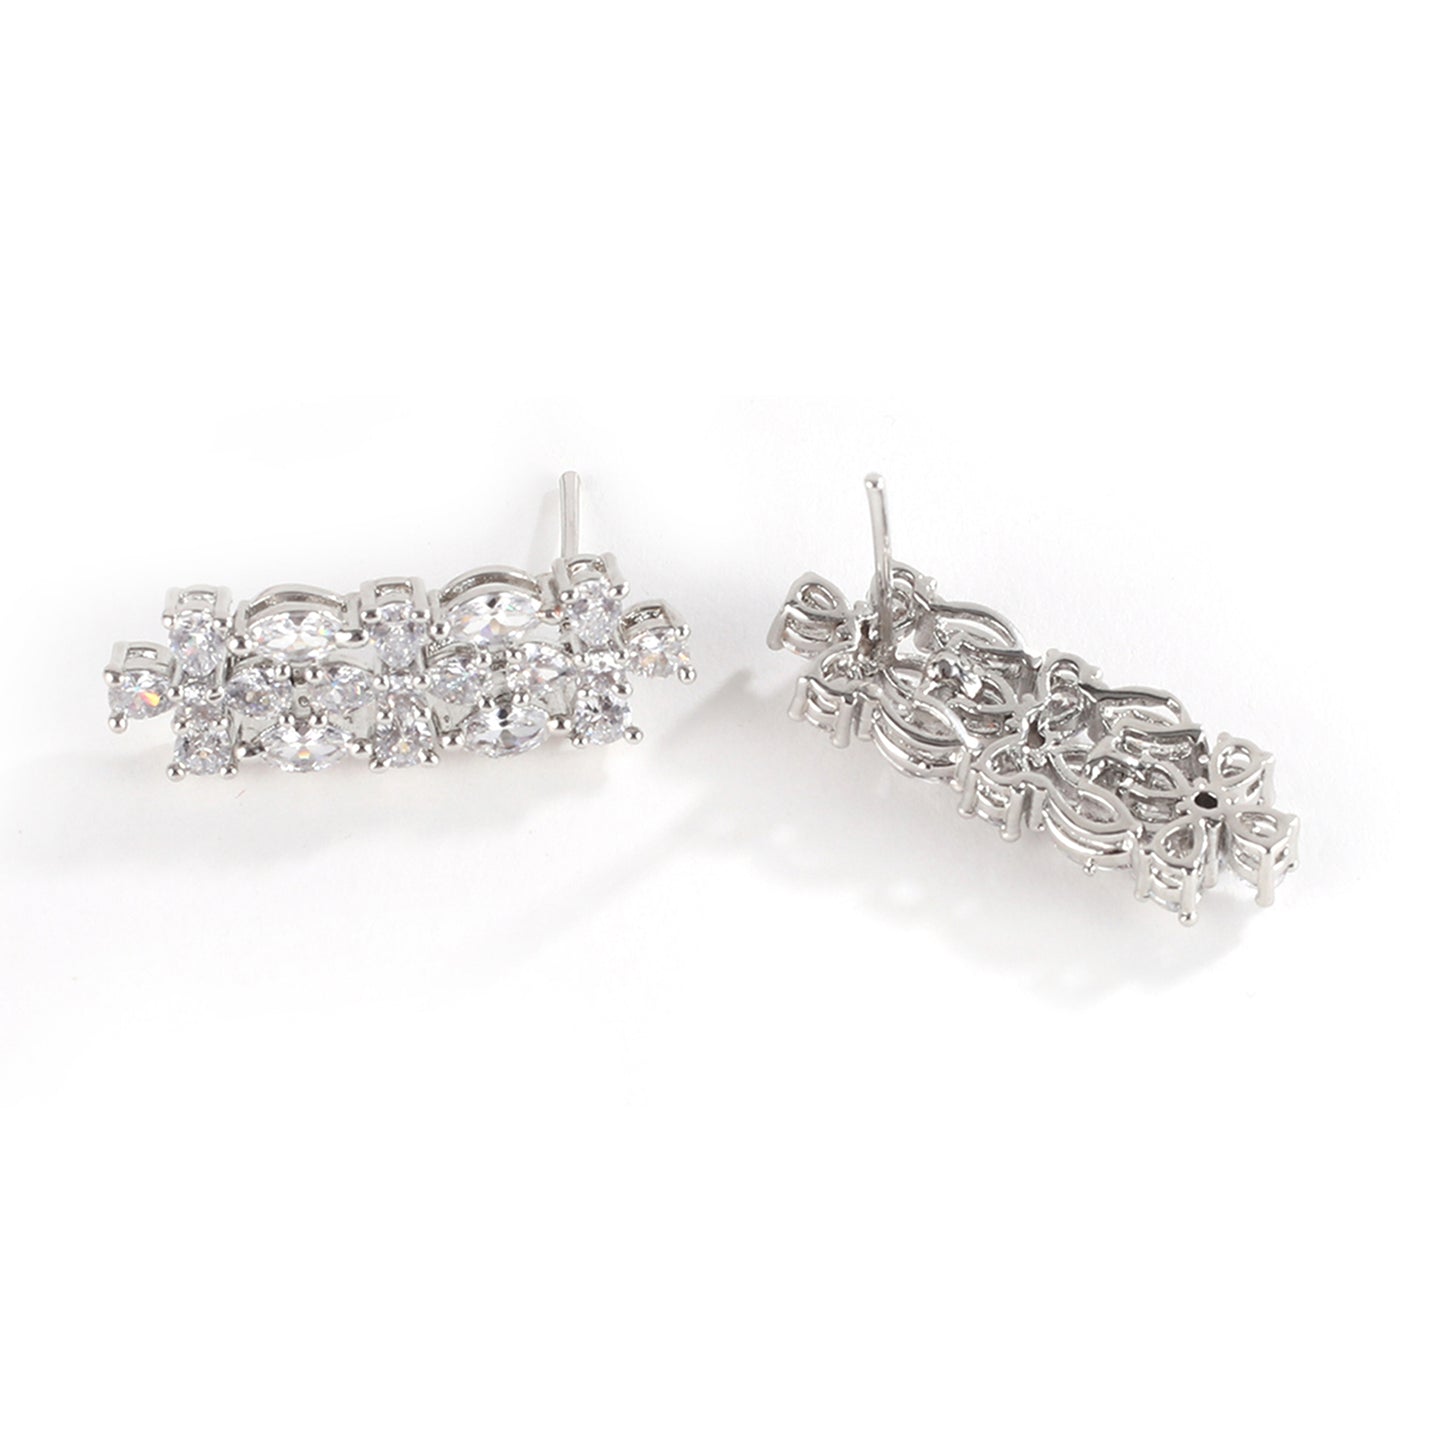 Unique Design Silver Polish Diamond Necklace Set with Earrings